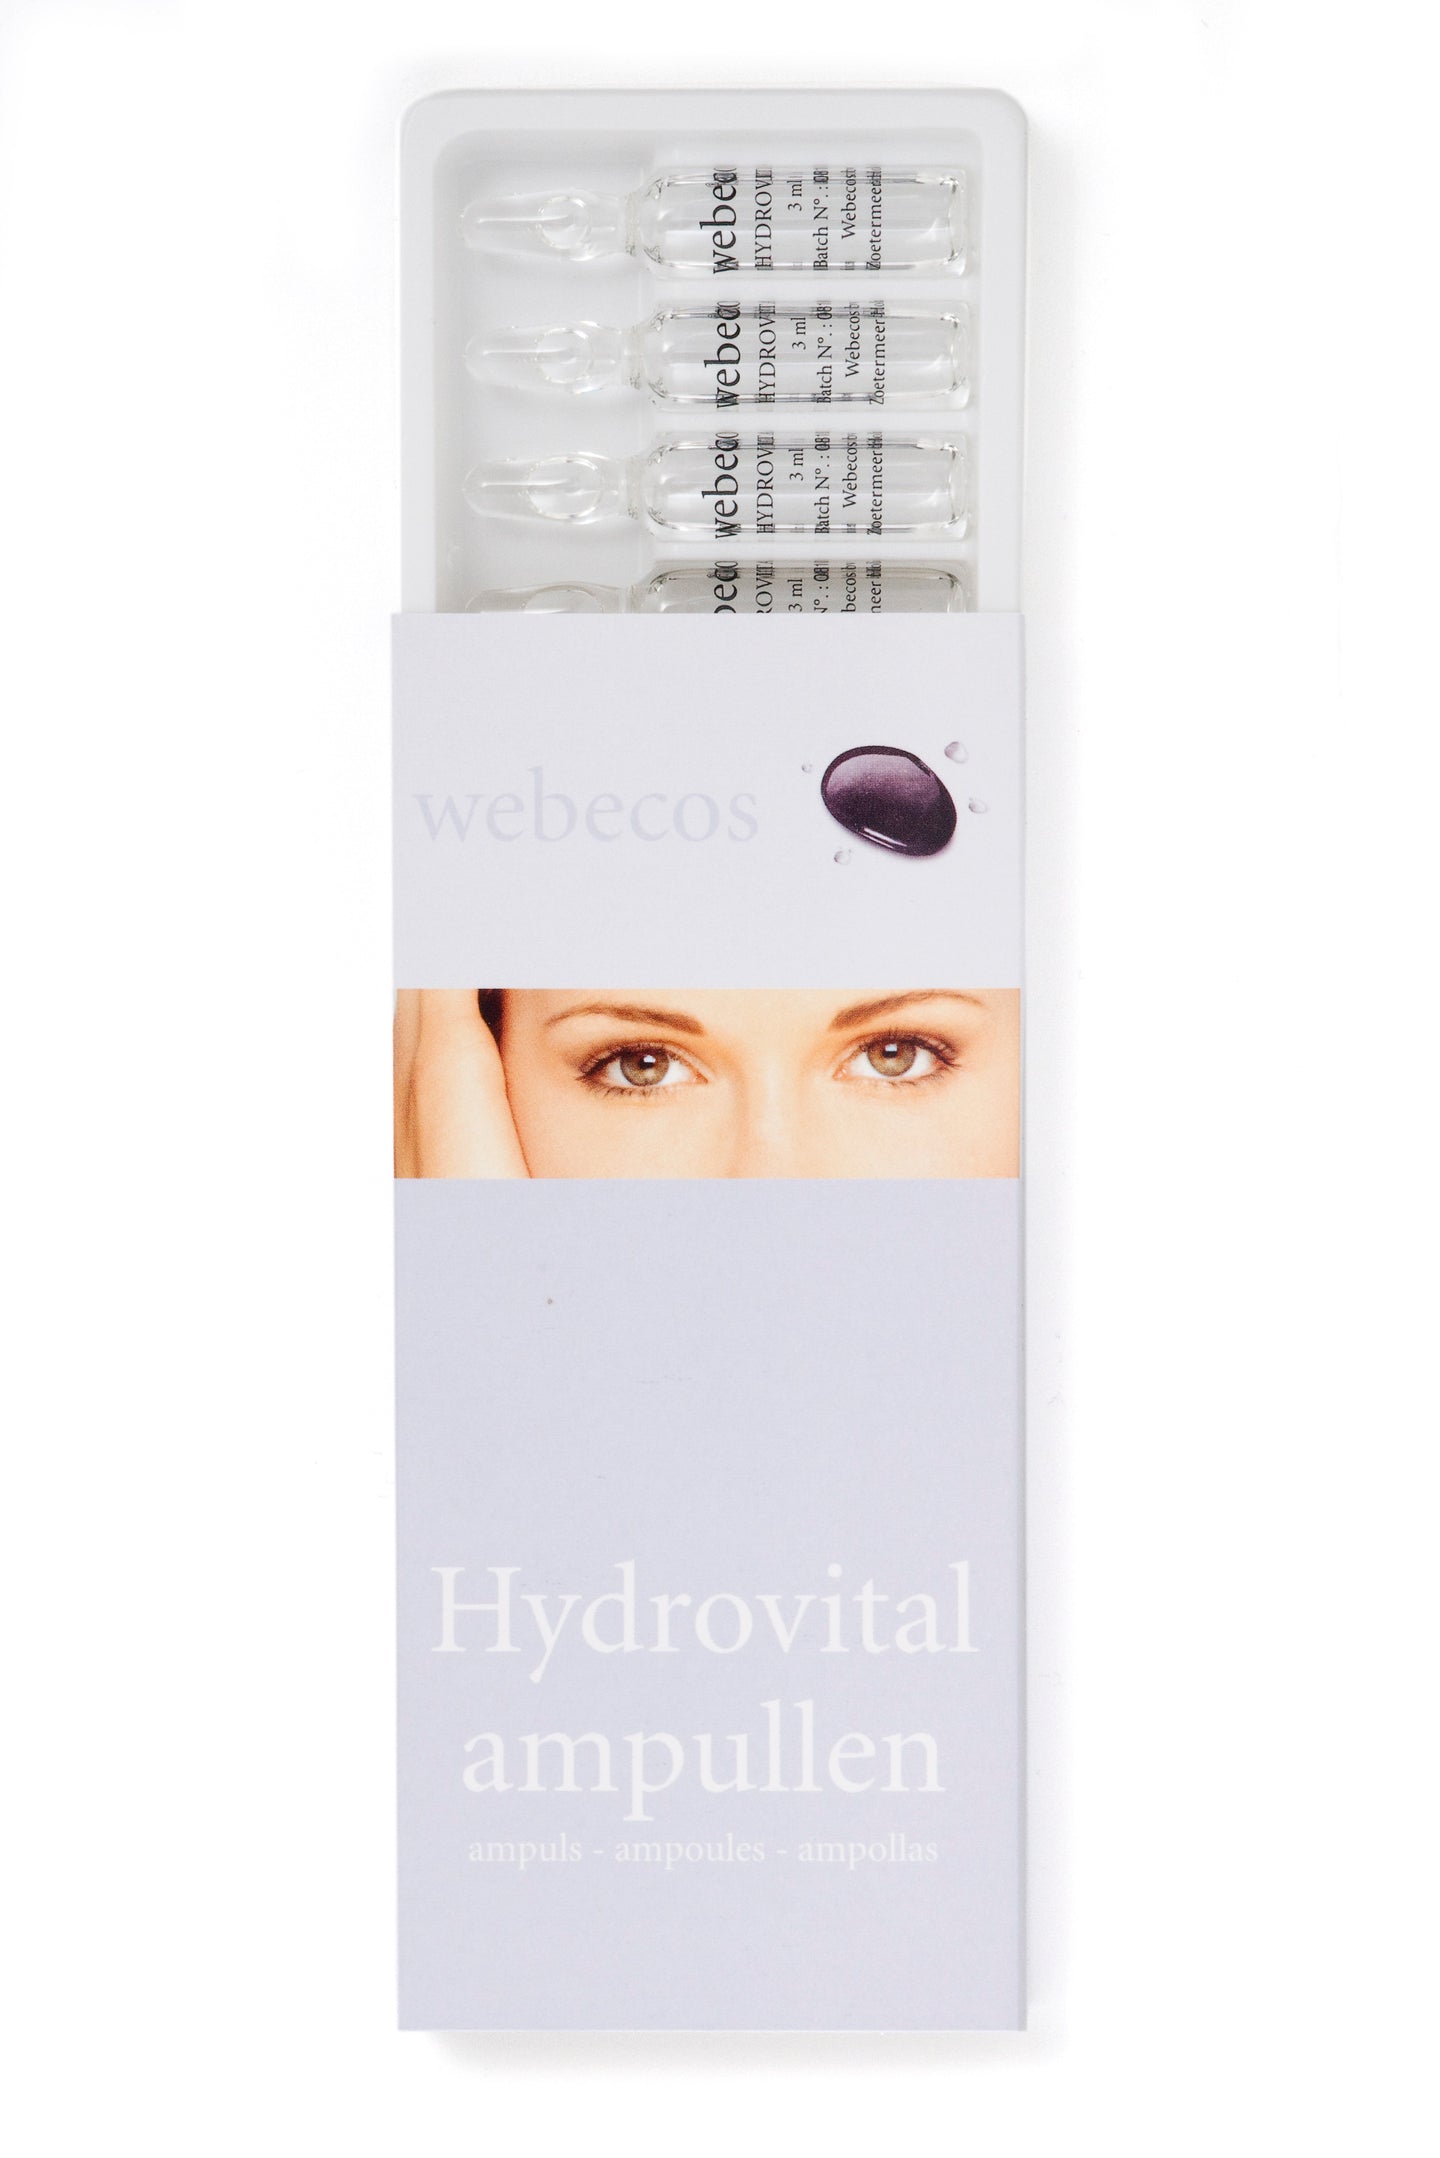 Webecos - Hydrovital Ampul